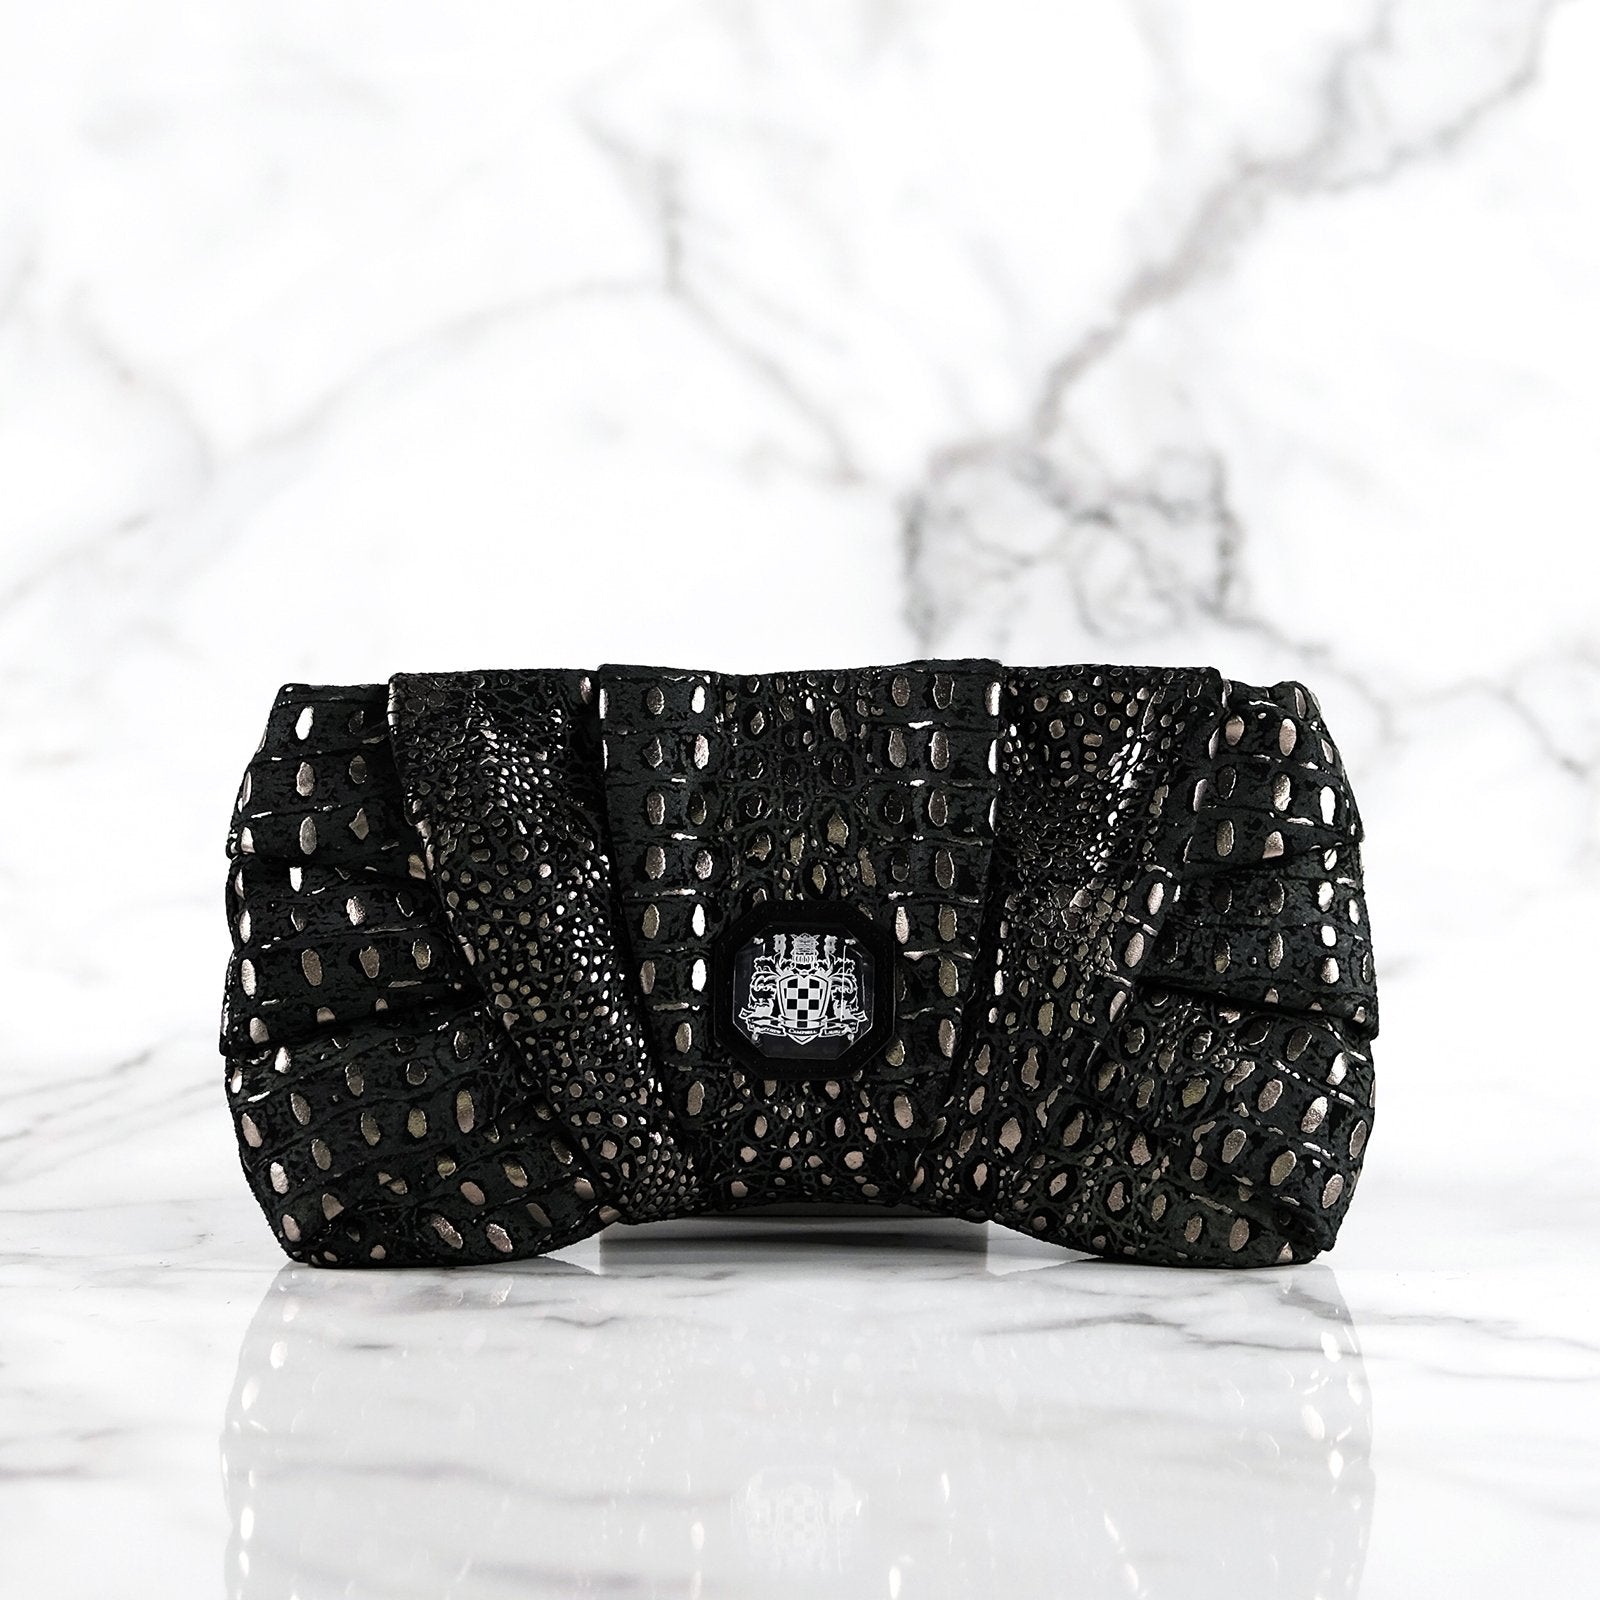 Celest black and embossed silver croco patterned suede handbag